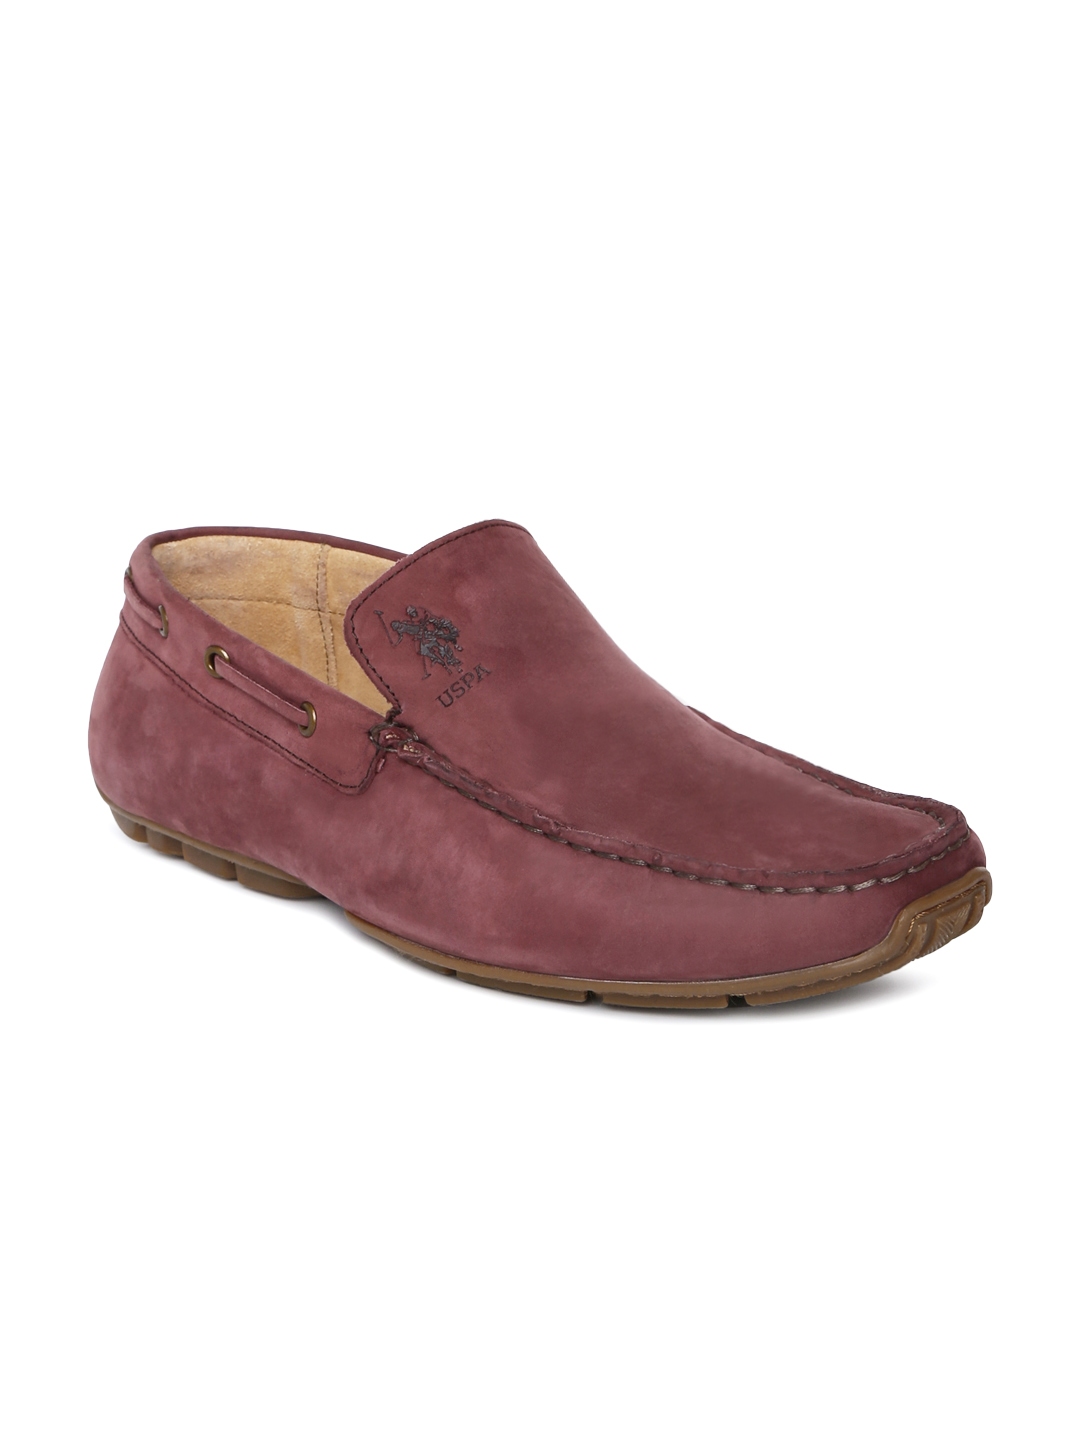 burgundy boat shoes